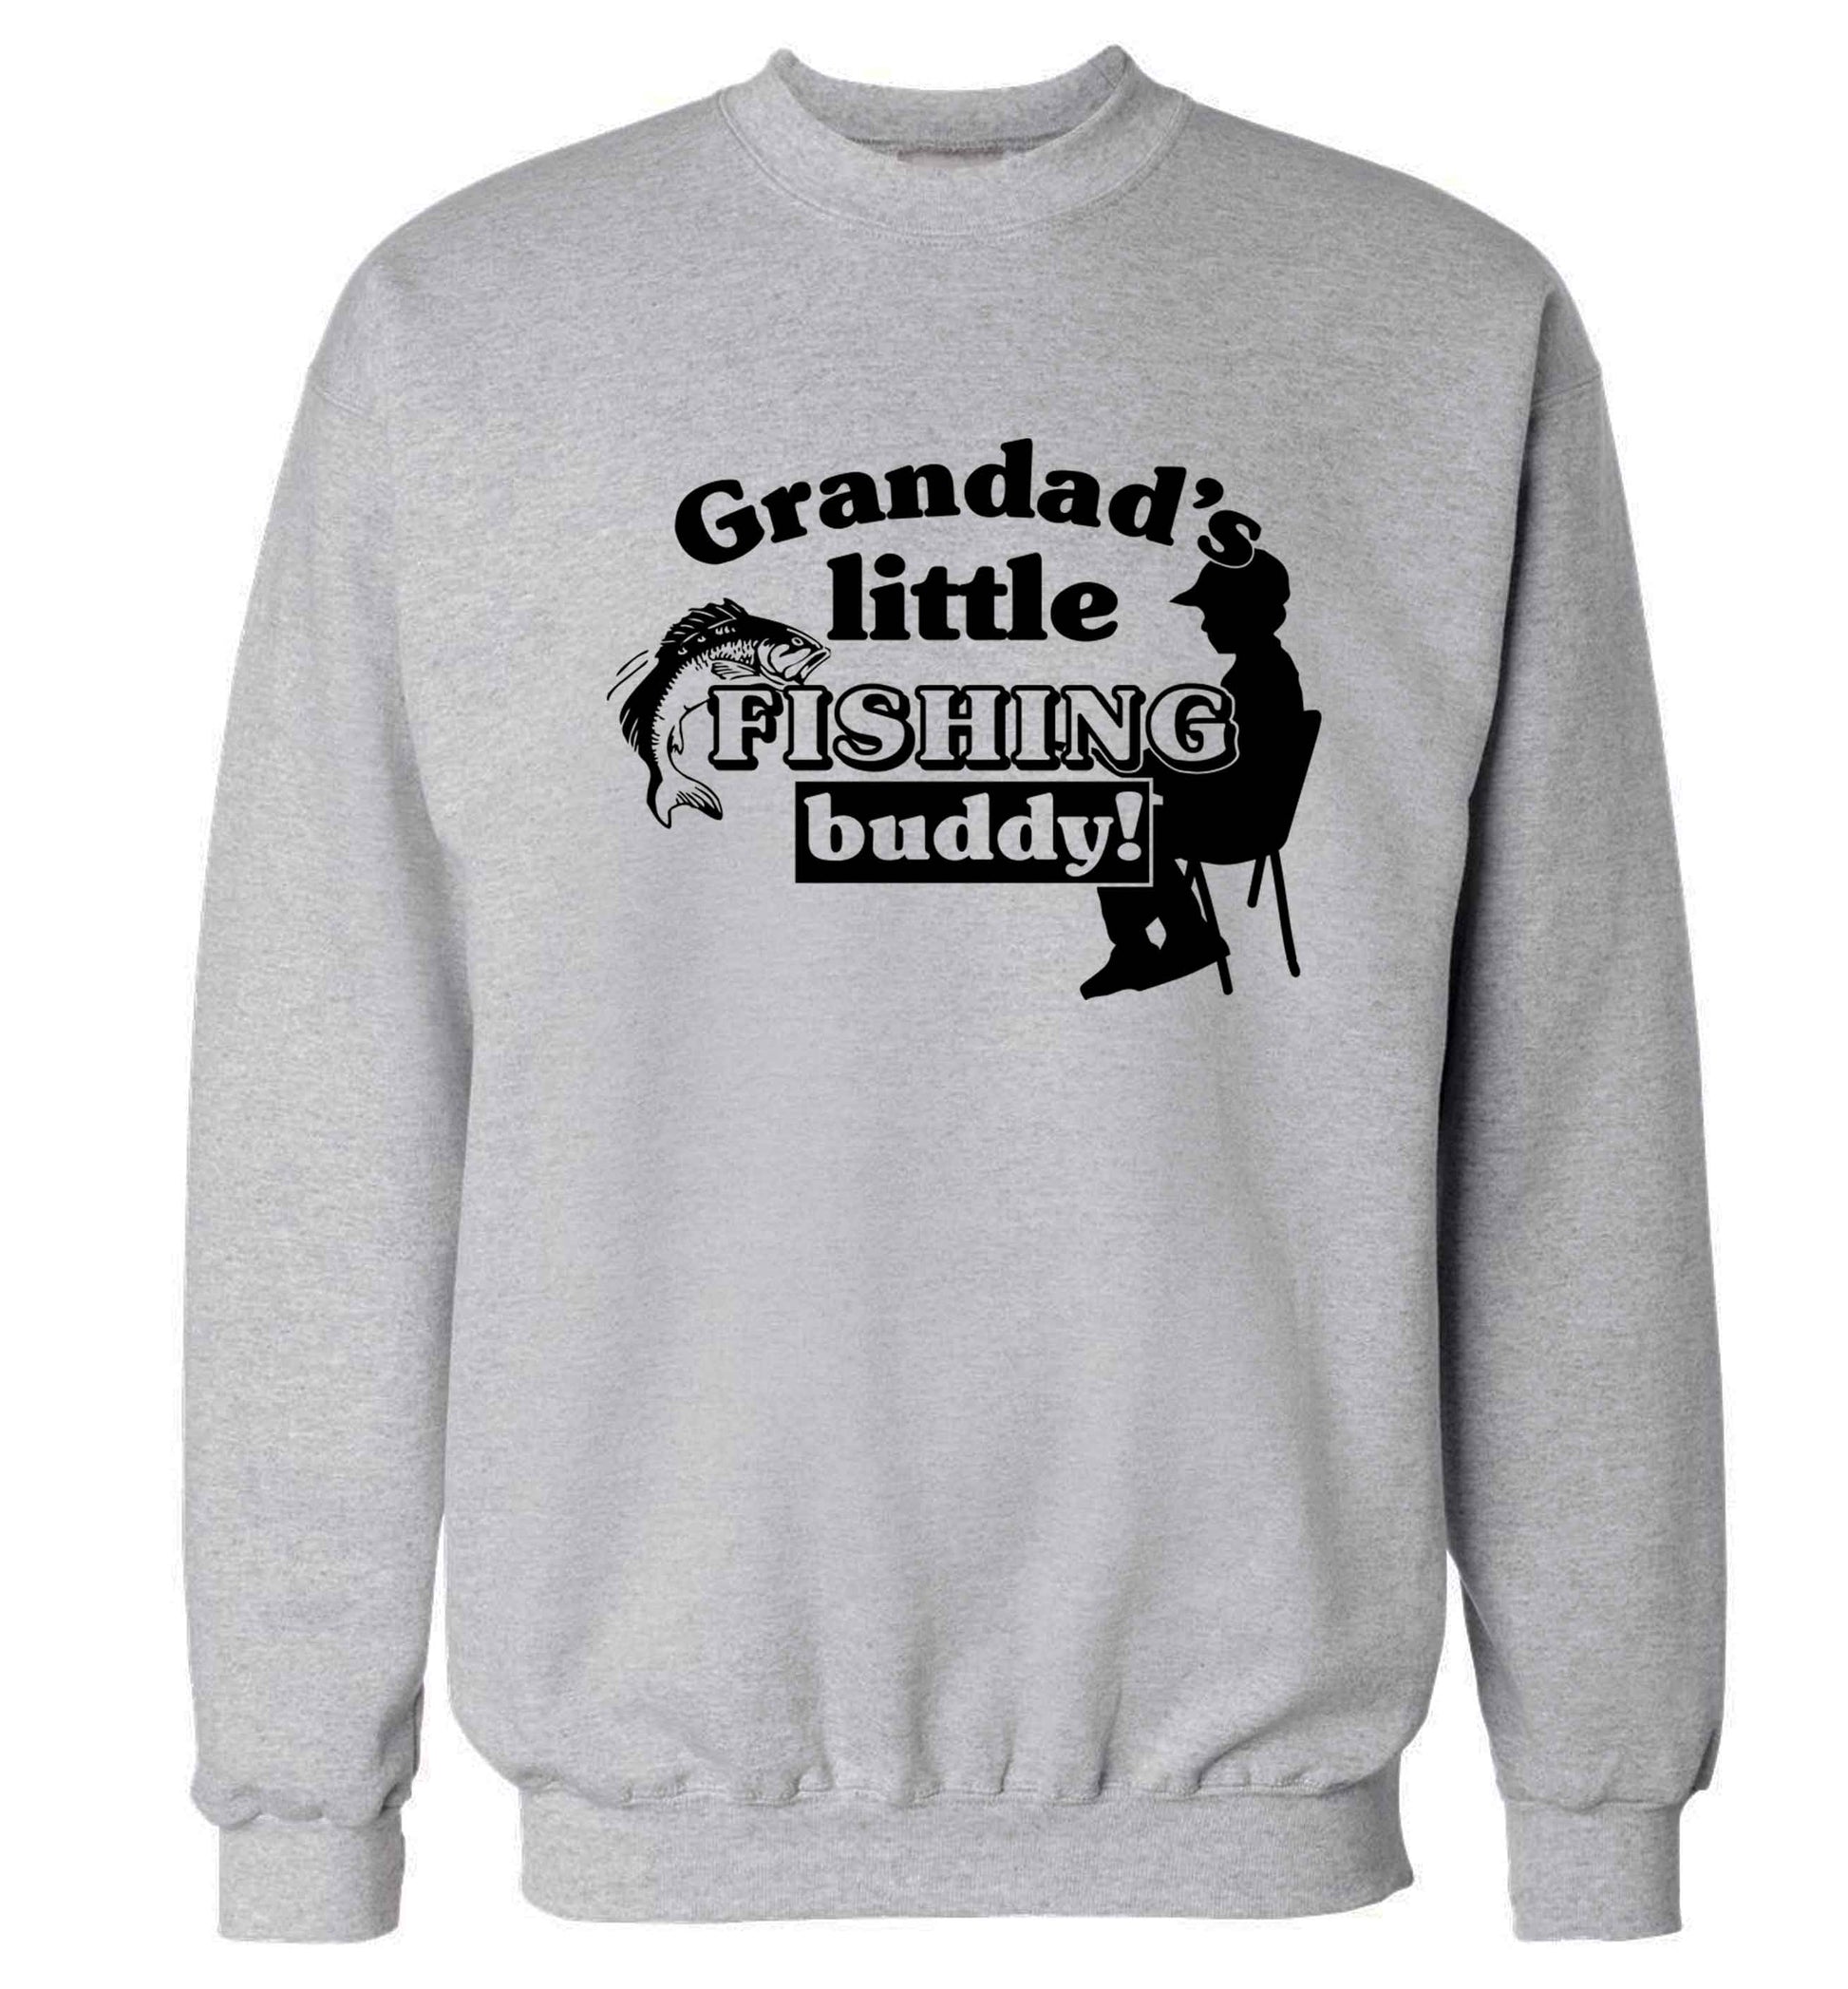 Grandad's little fishing buddy! Adult's unisex grey Sweater 2XL